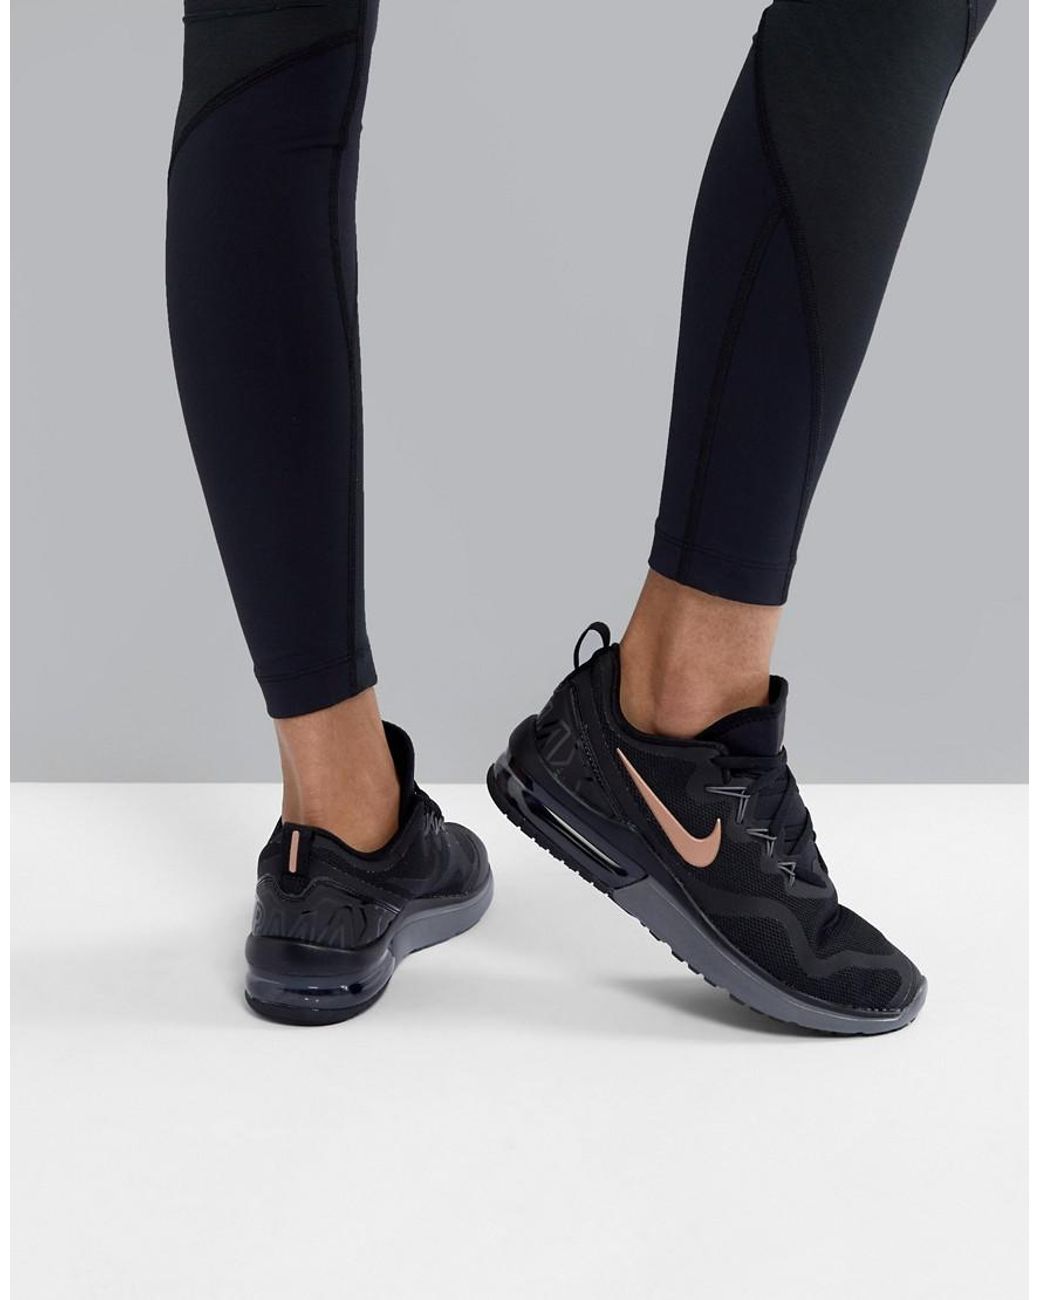 Nike Running Air Max Fury In Black And Rose | Lyst Australia